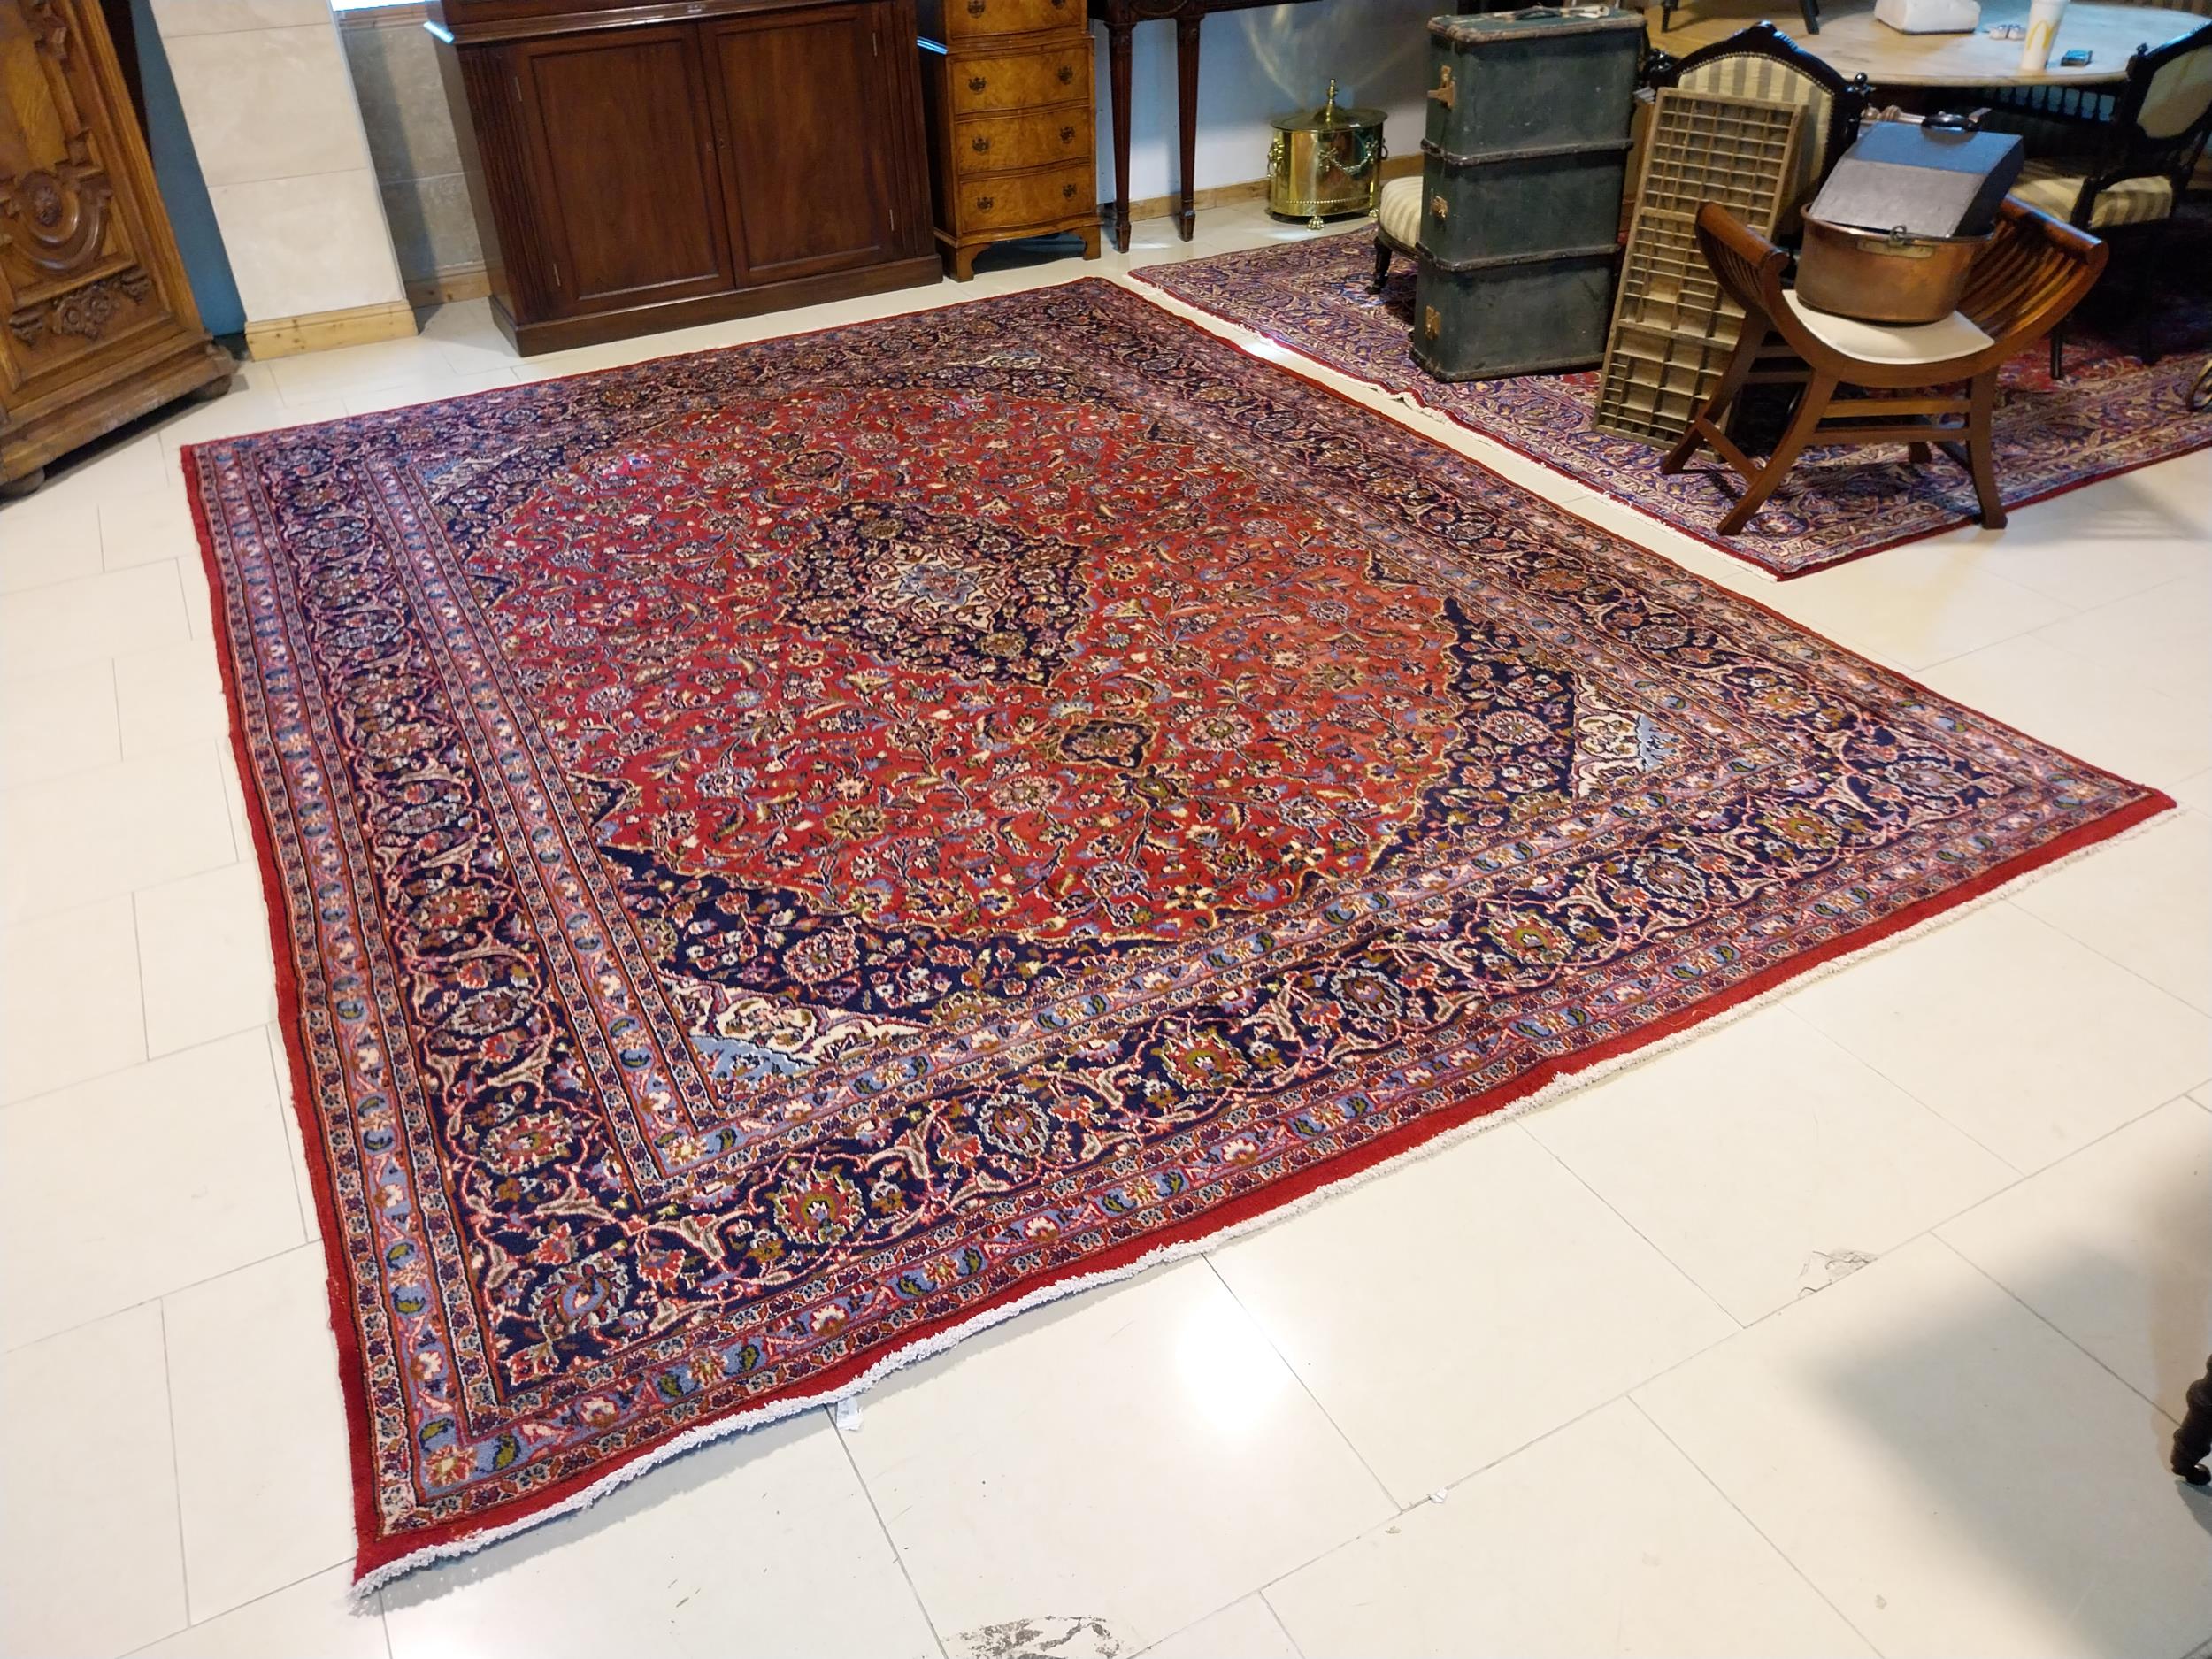 Good quality decorative Persian Keshann carpet square {400cm L x 300cm W}